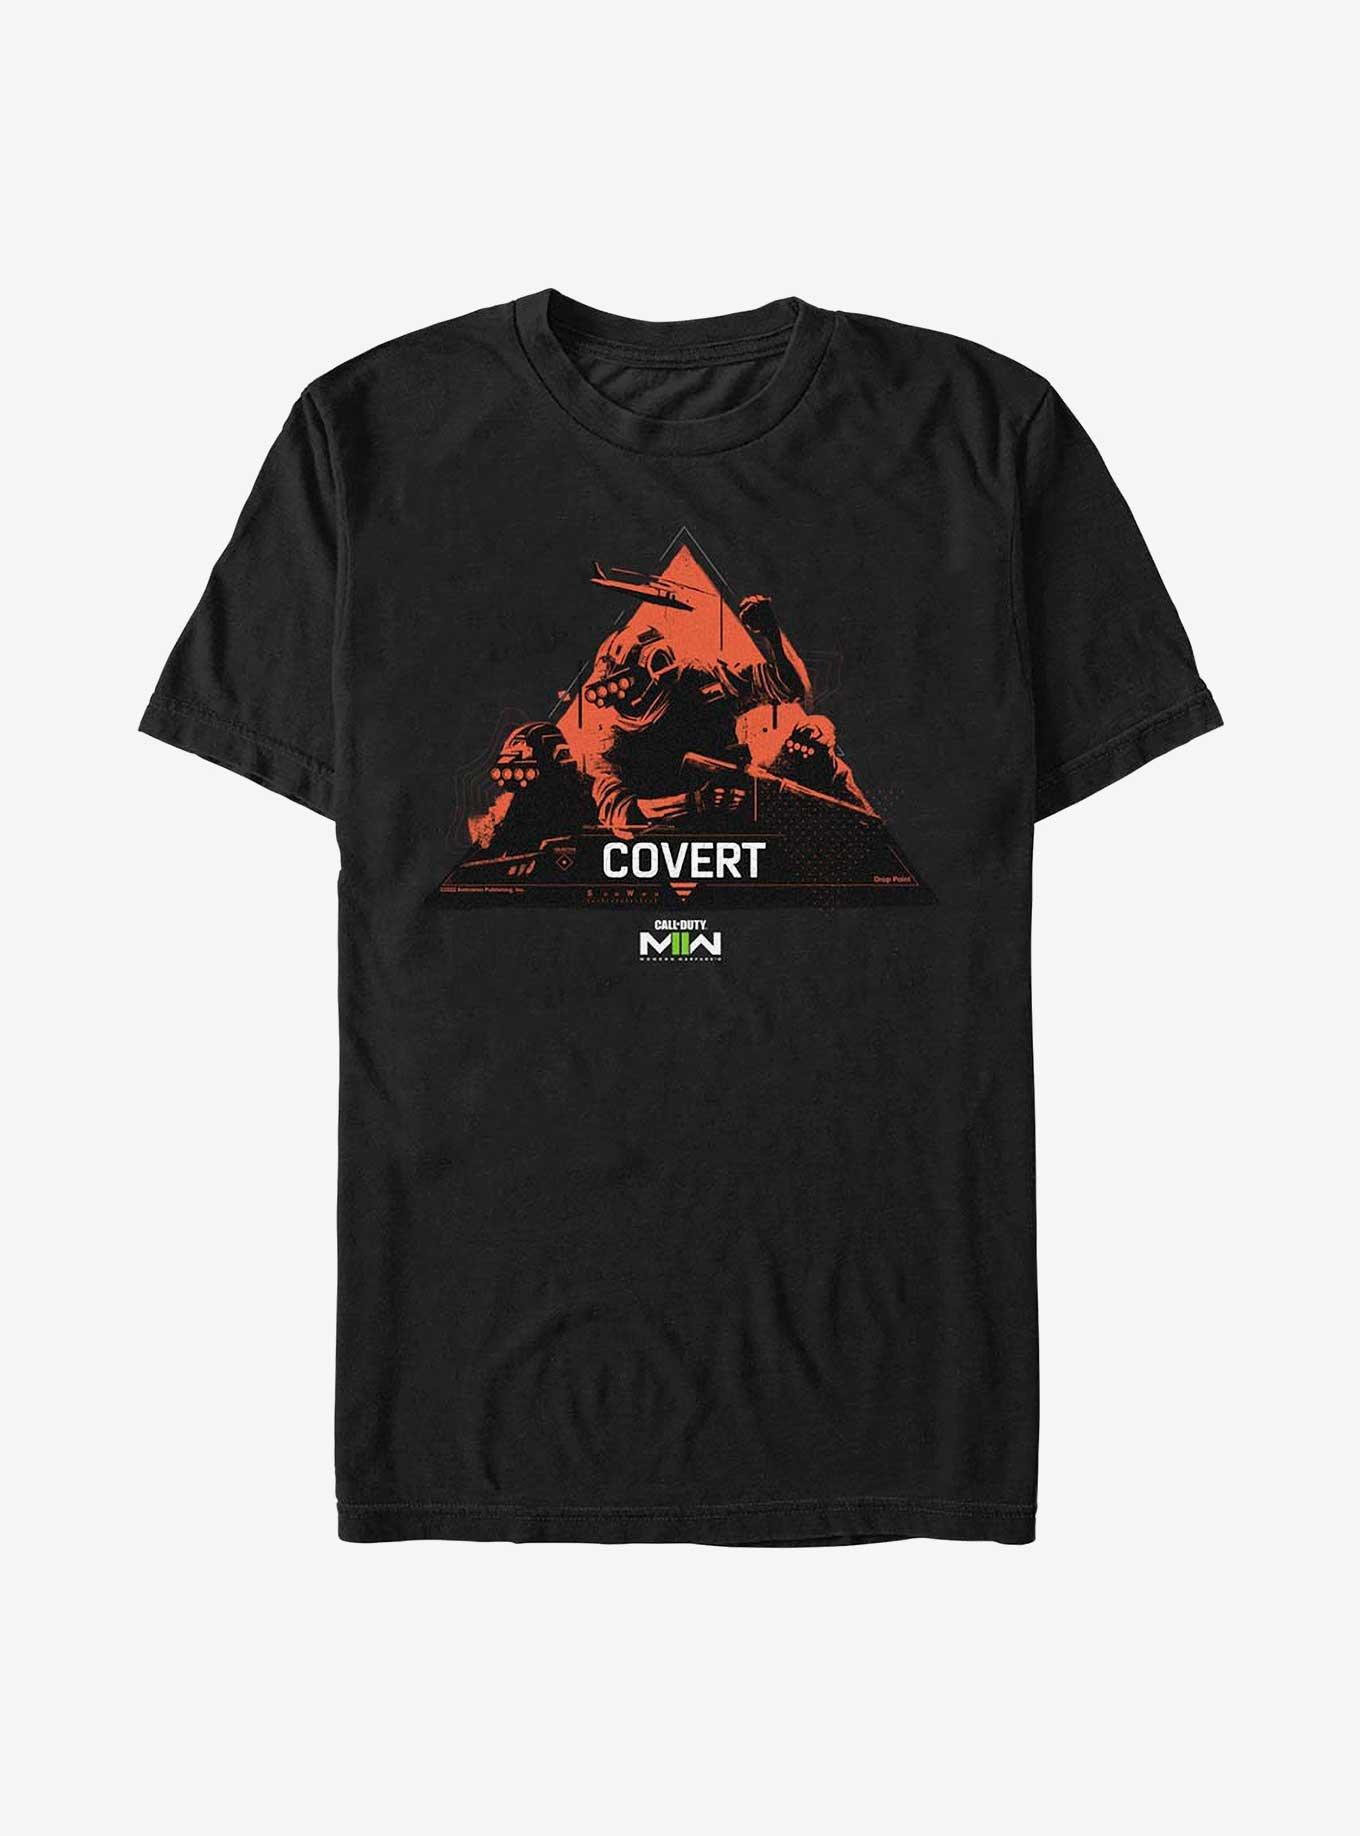 Call of Duty Covert Team T-Shirt, BLACK, hi-res